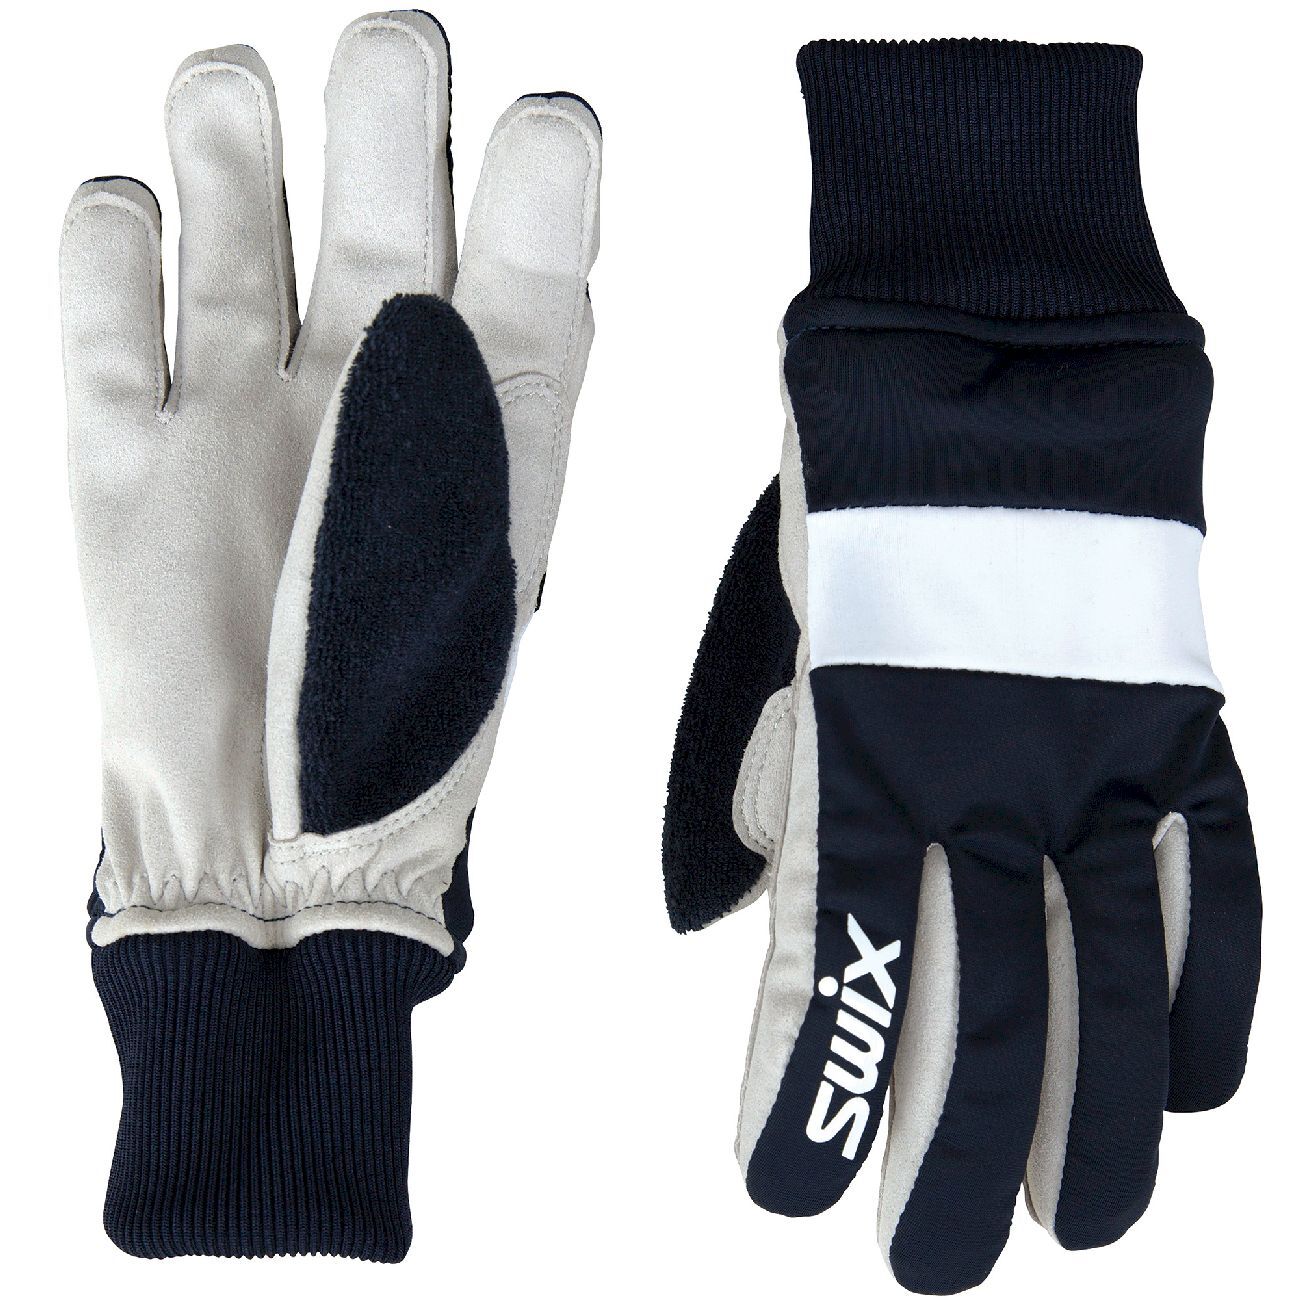 Swix Cross Glove Junior - Cross-country ski gloves - Kids